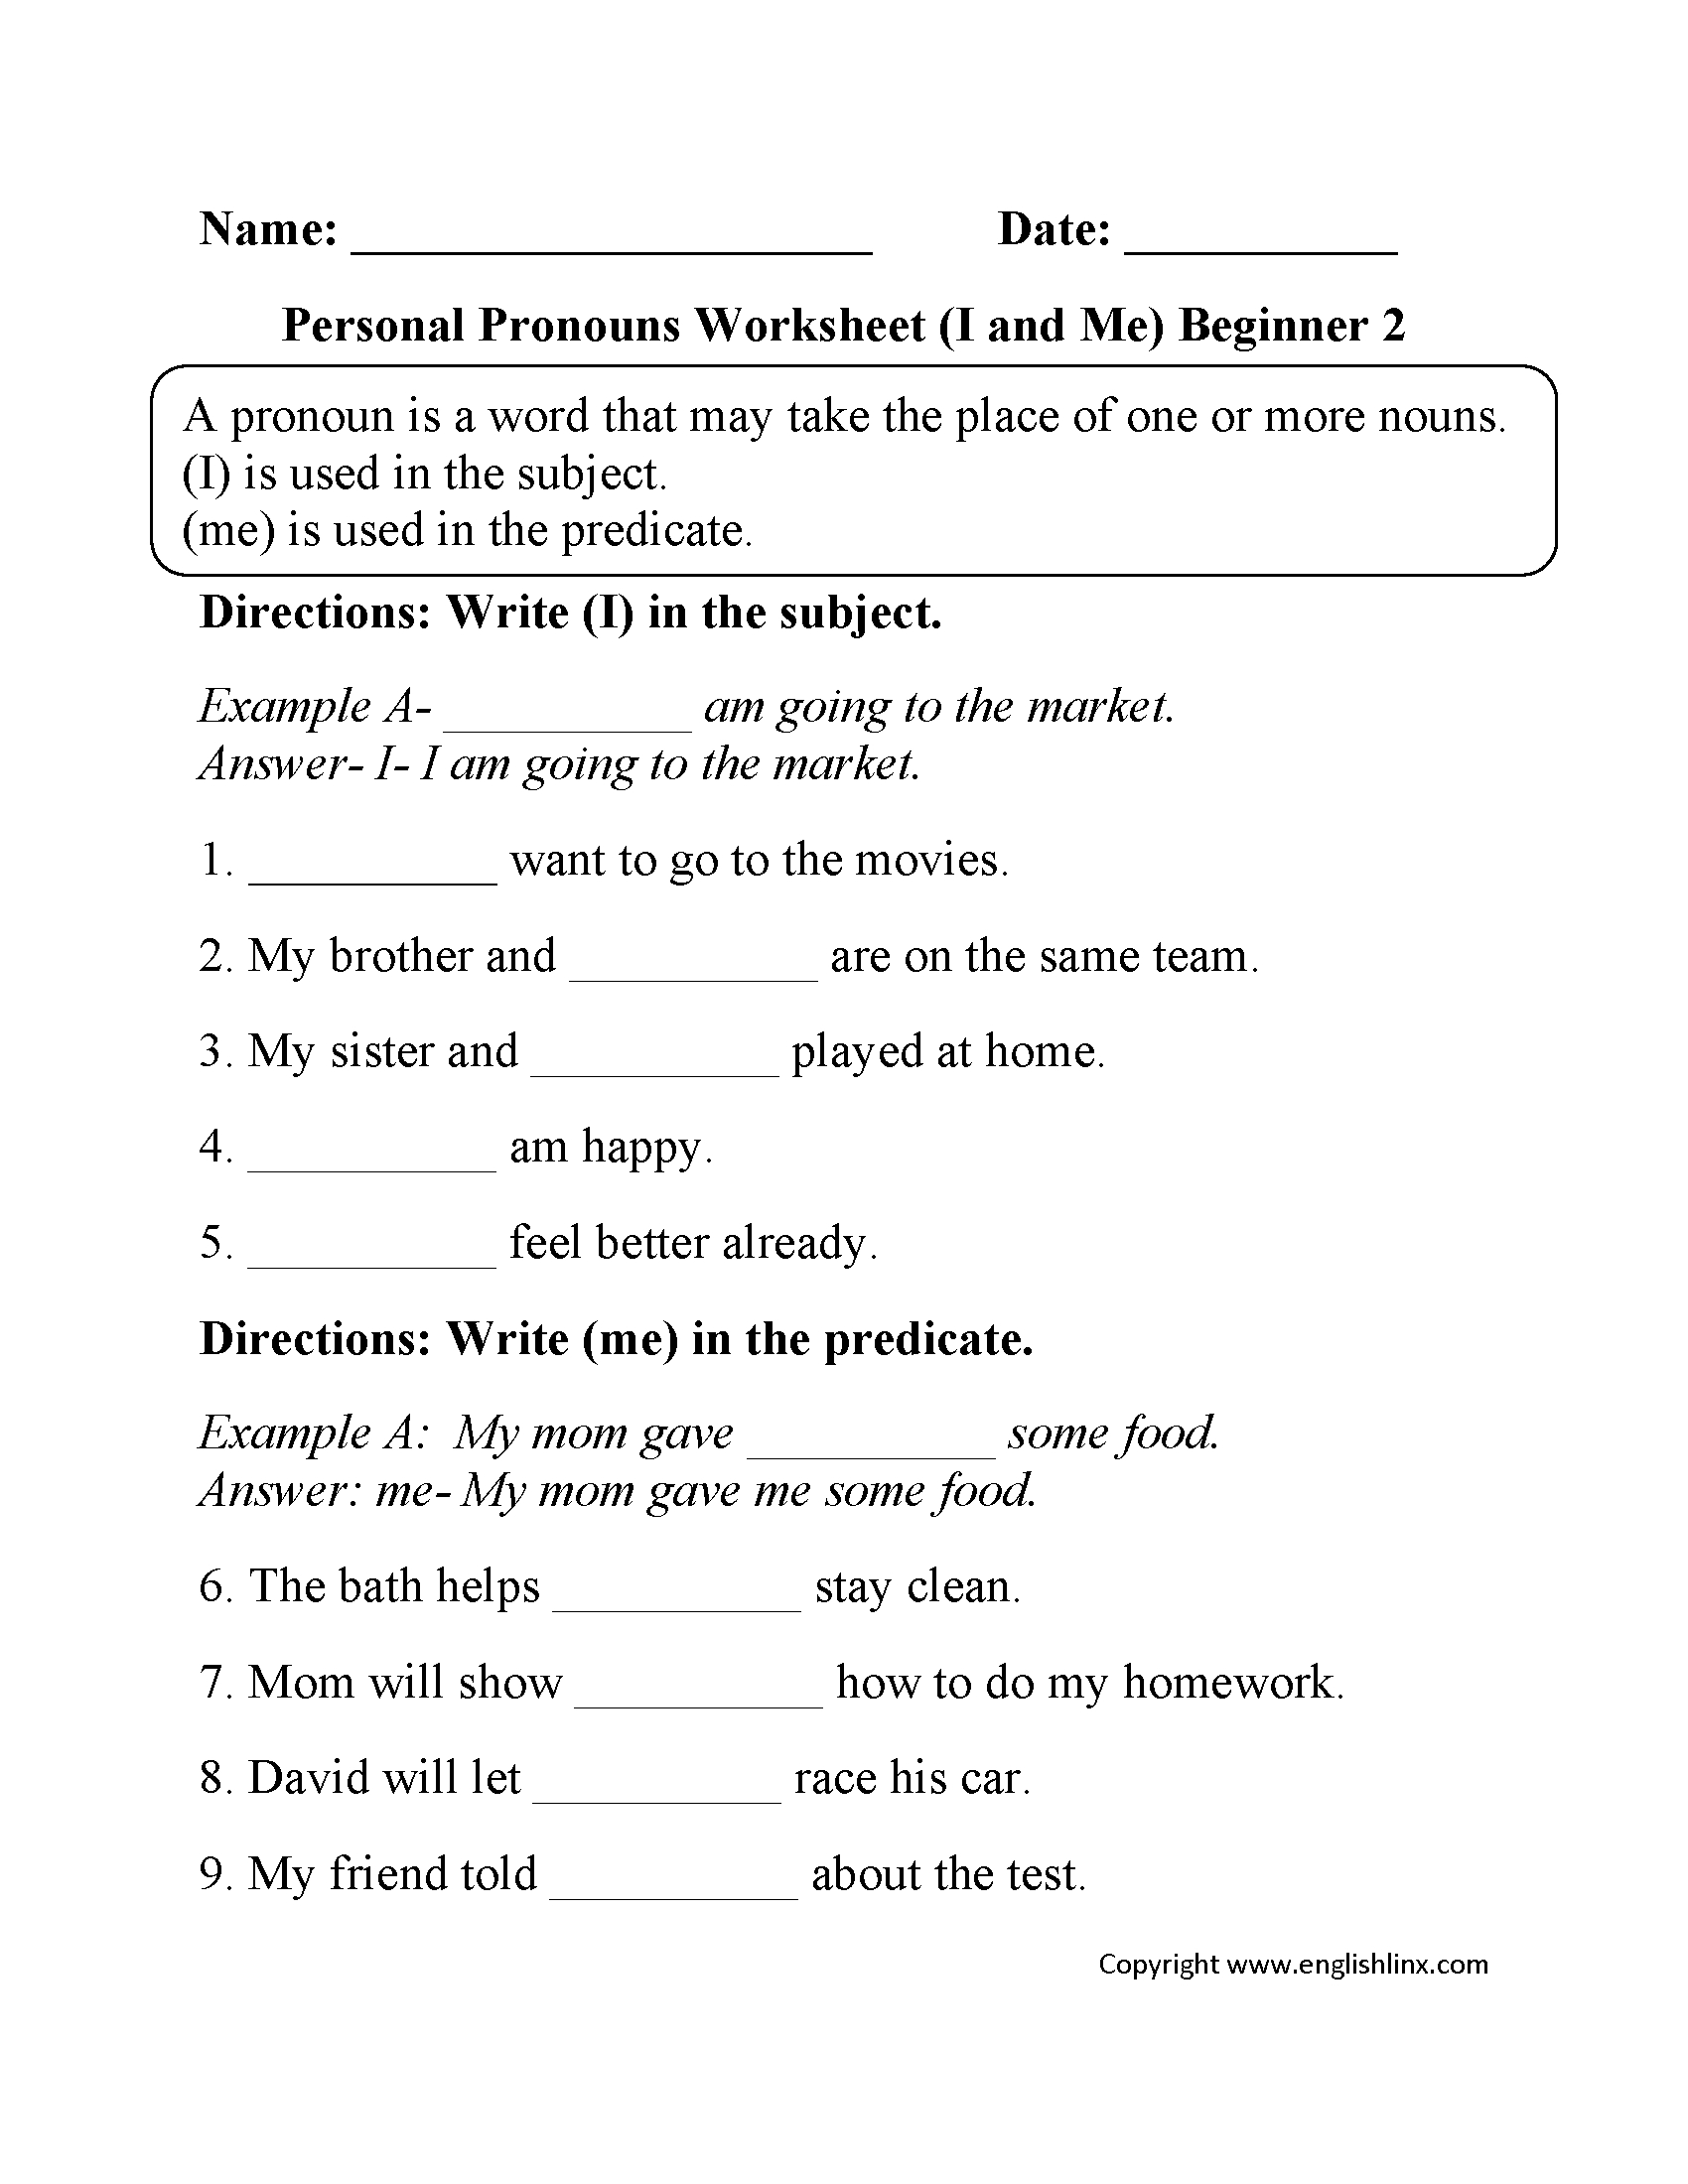 Pronouns Worksheets | Personal Pronouns Worksheets | Free Printable Pronoun Worksheets For 2Nd Grade